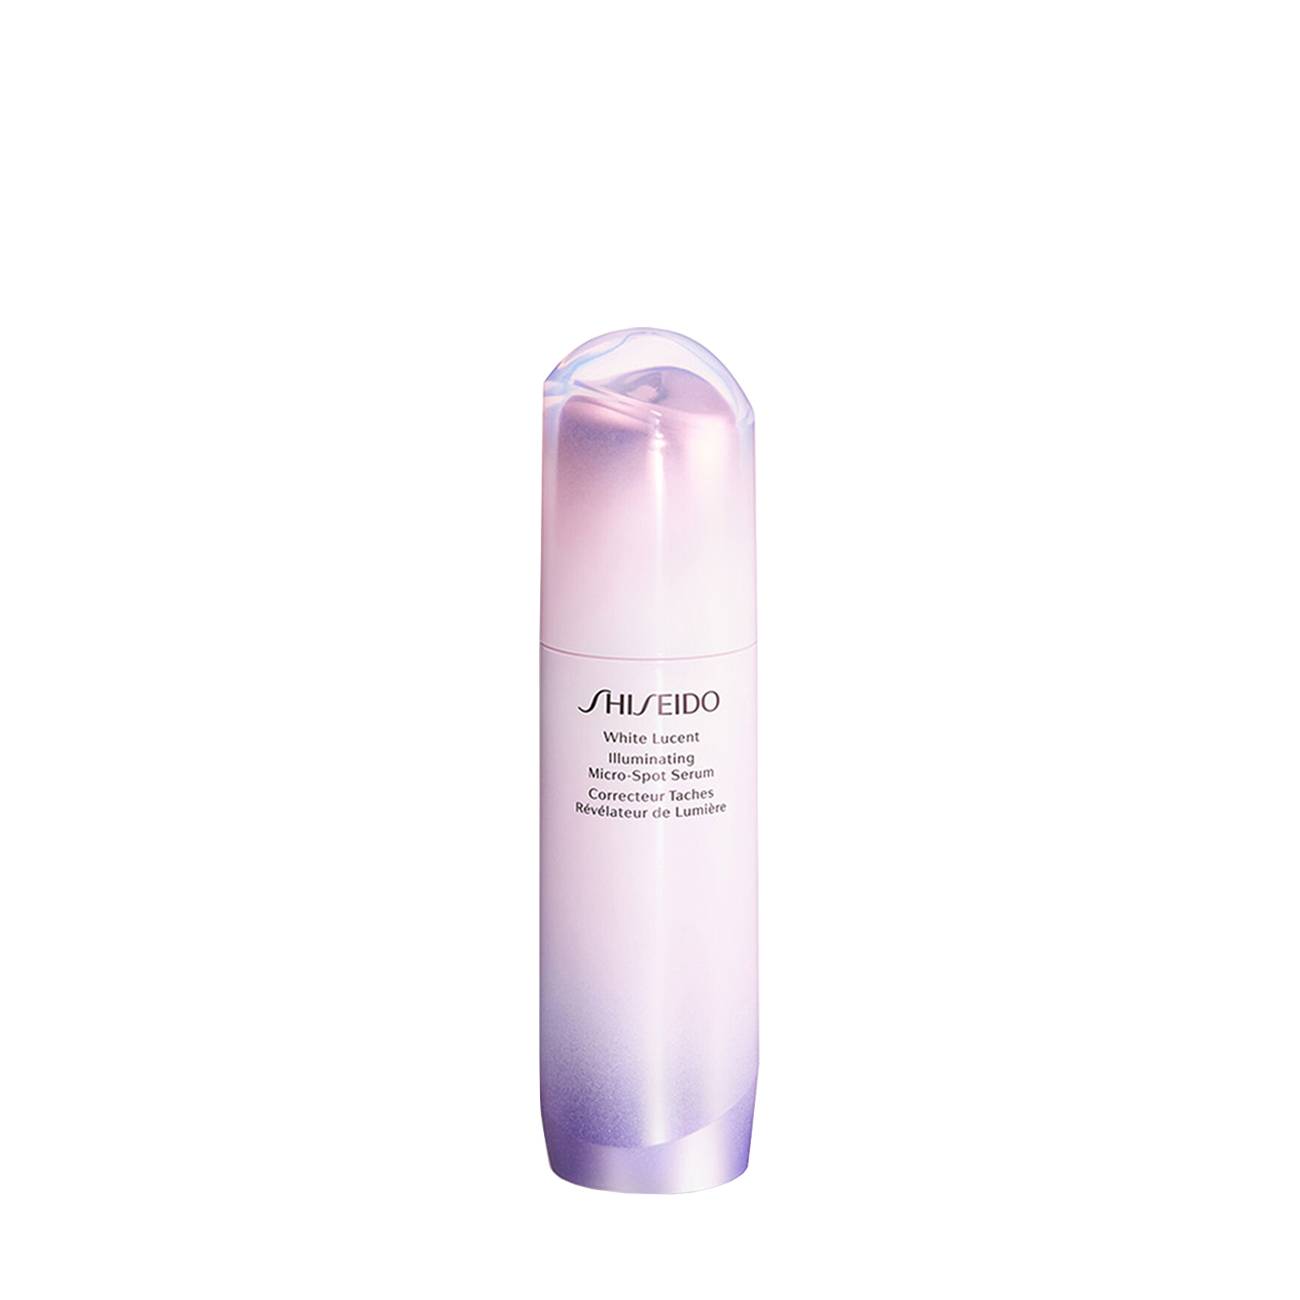 White Lucent Illuminating Micro-Spot Serum 50 ml original Shiseido bestvalue